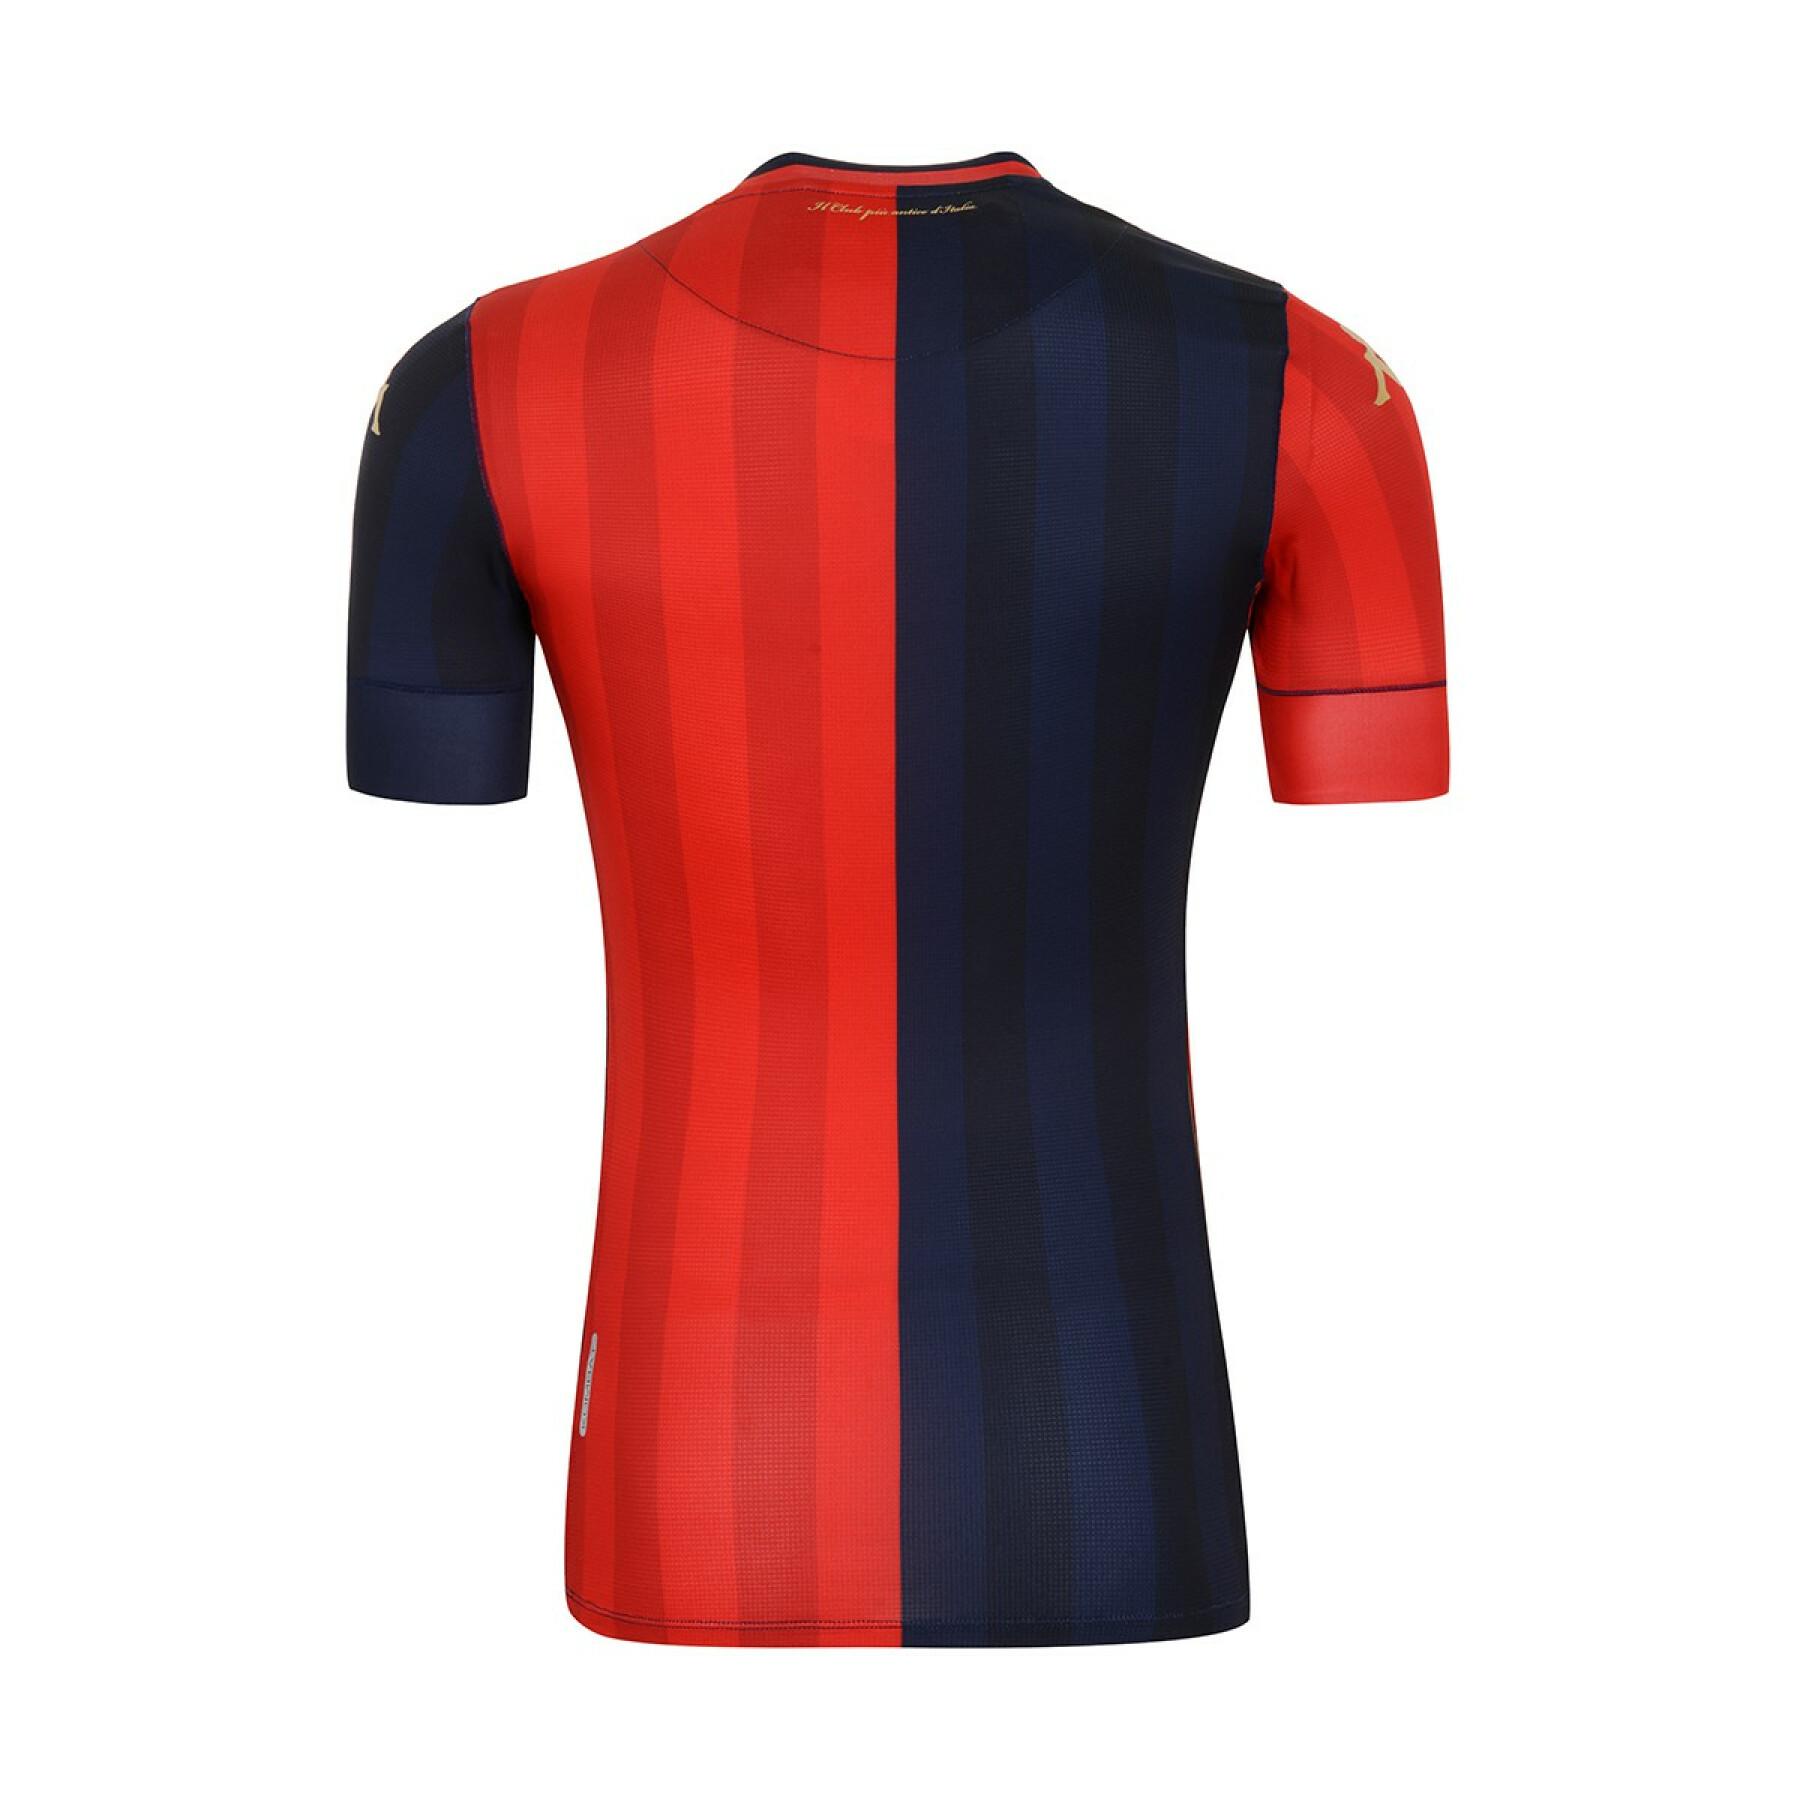 Home jersey Genoa 2021/22